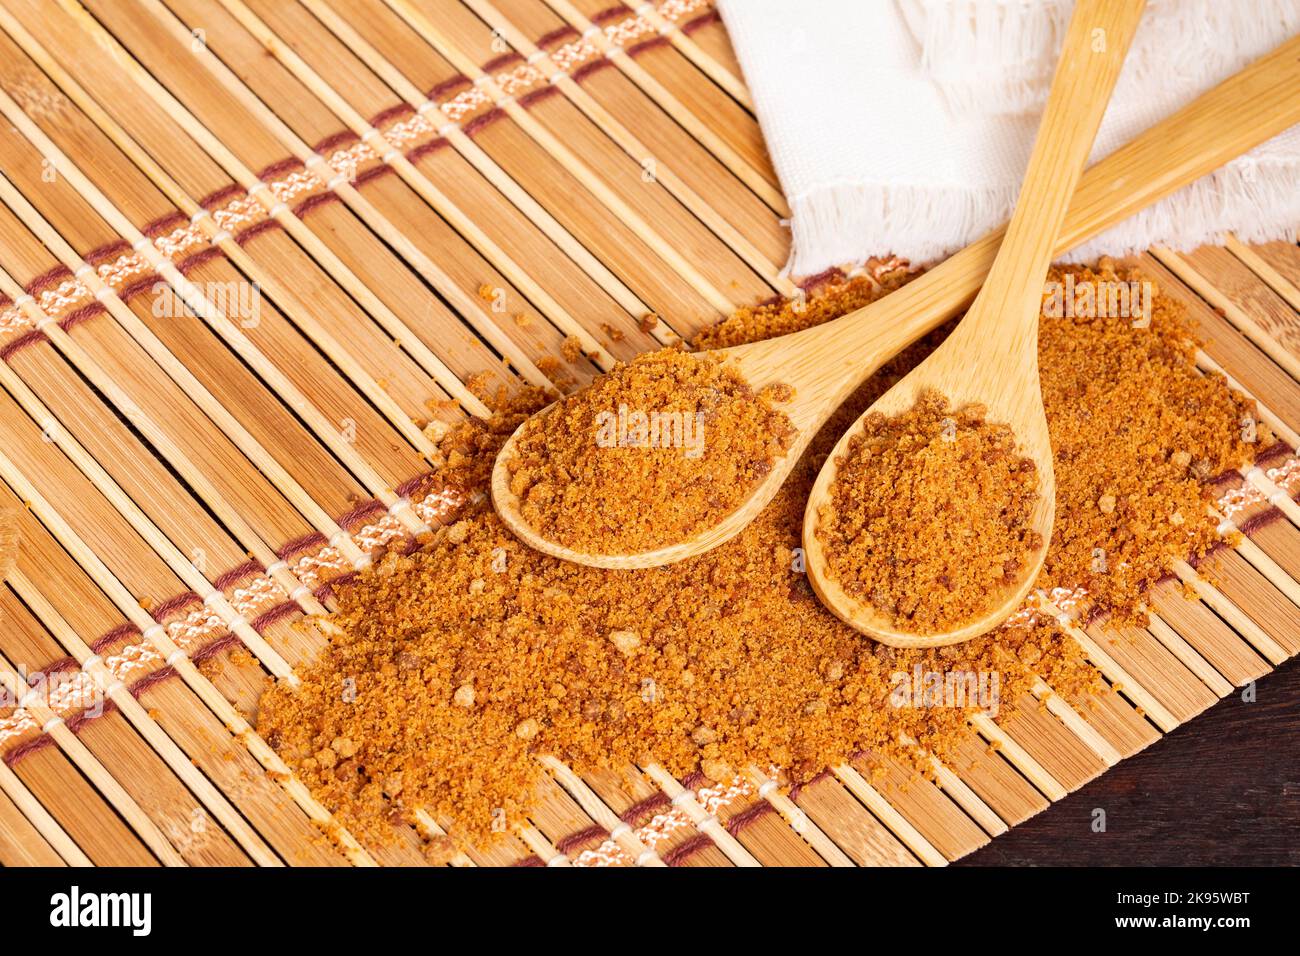 Panela or sugar cane candy - Saccharum officinarum Stock Photo